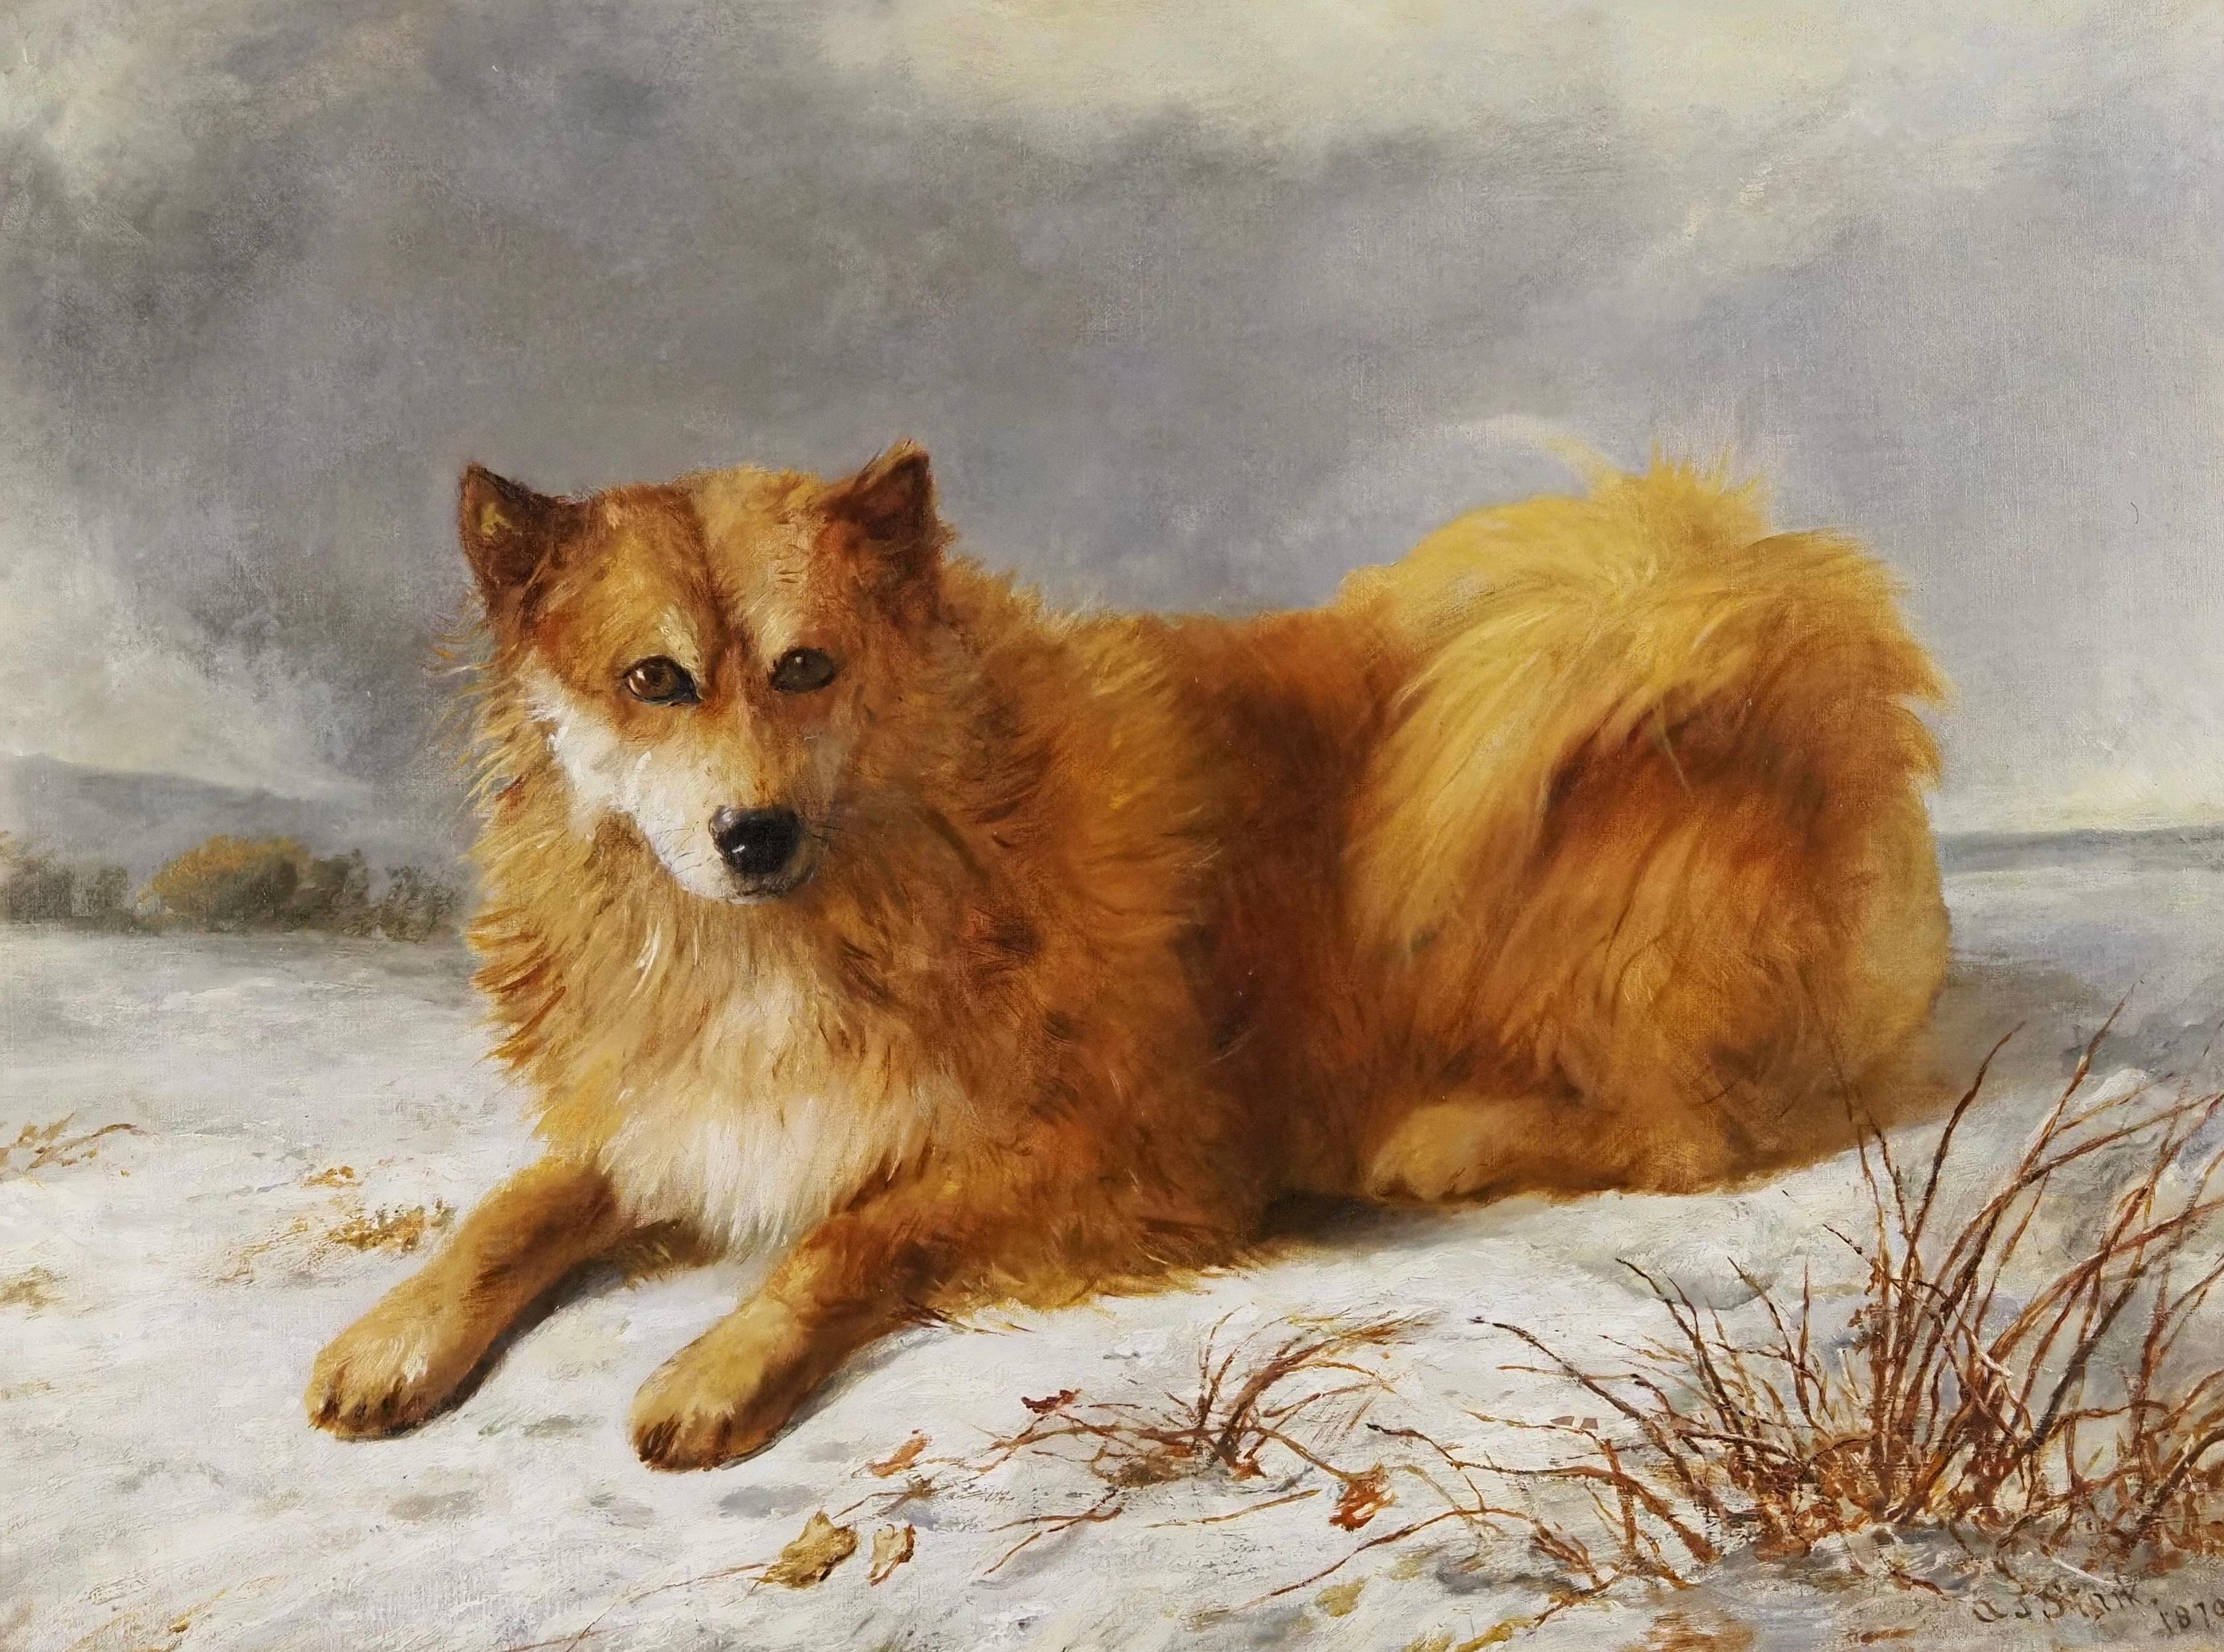 Arthur James Stark Animal Painting - A Husky in a snowy landscape